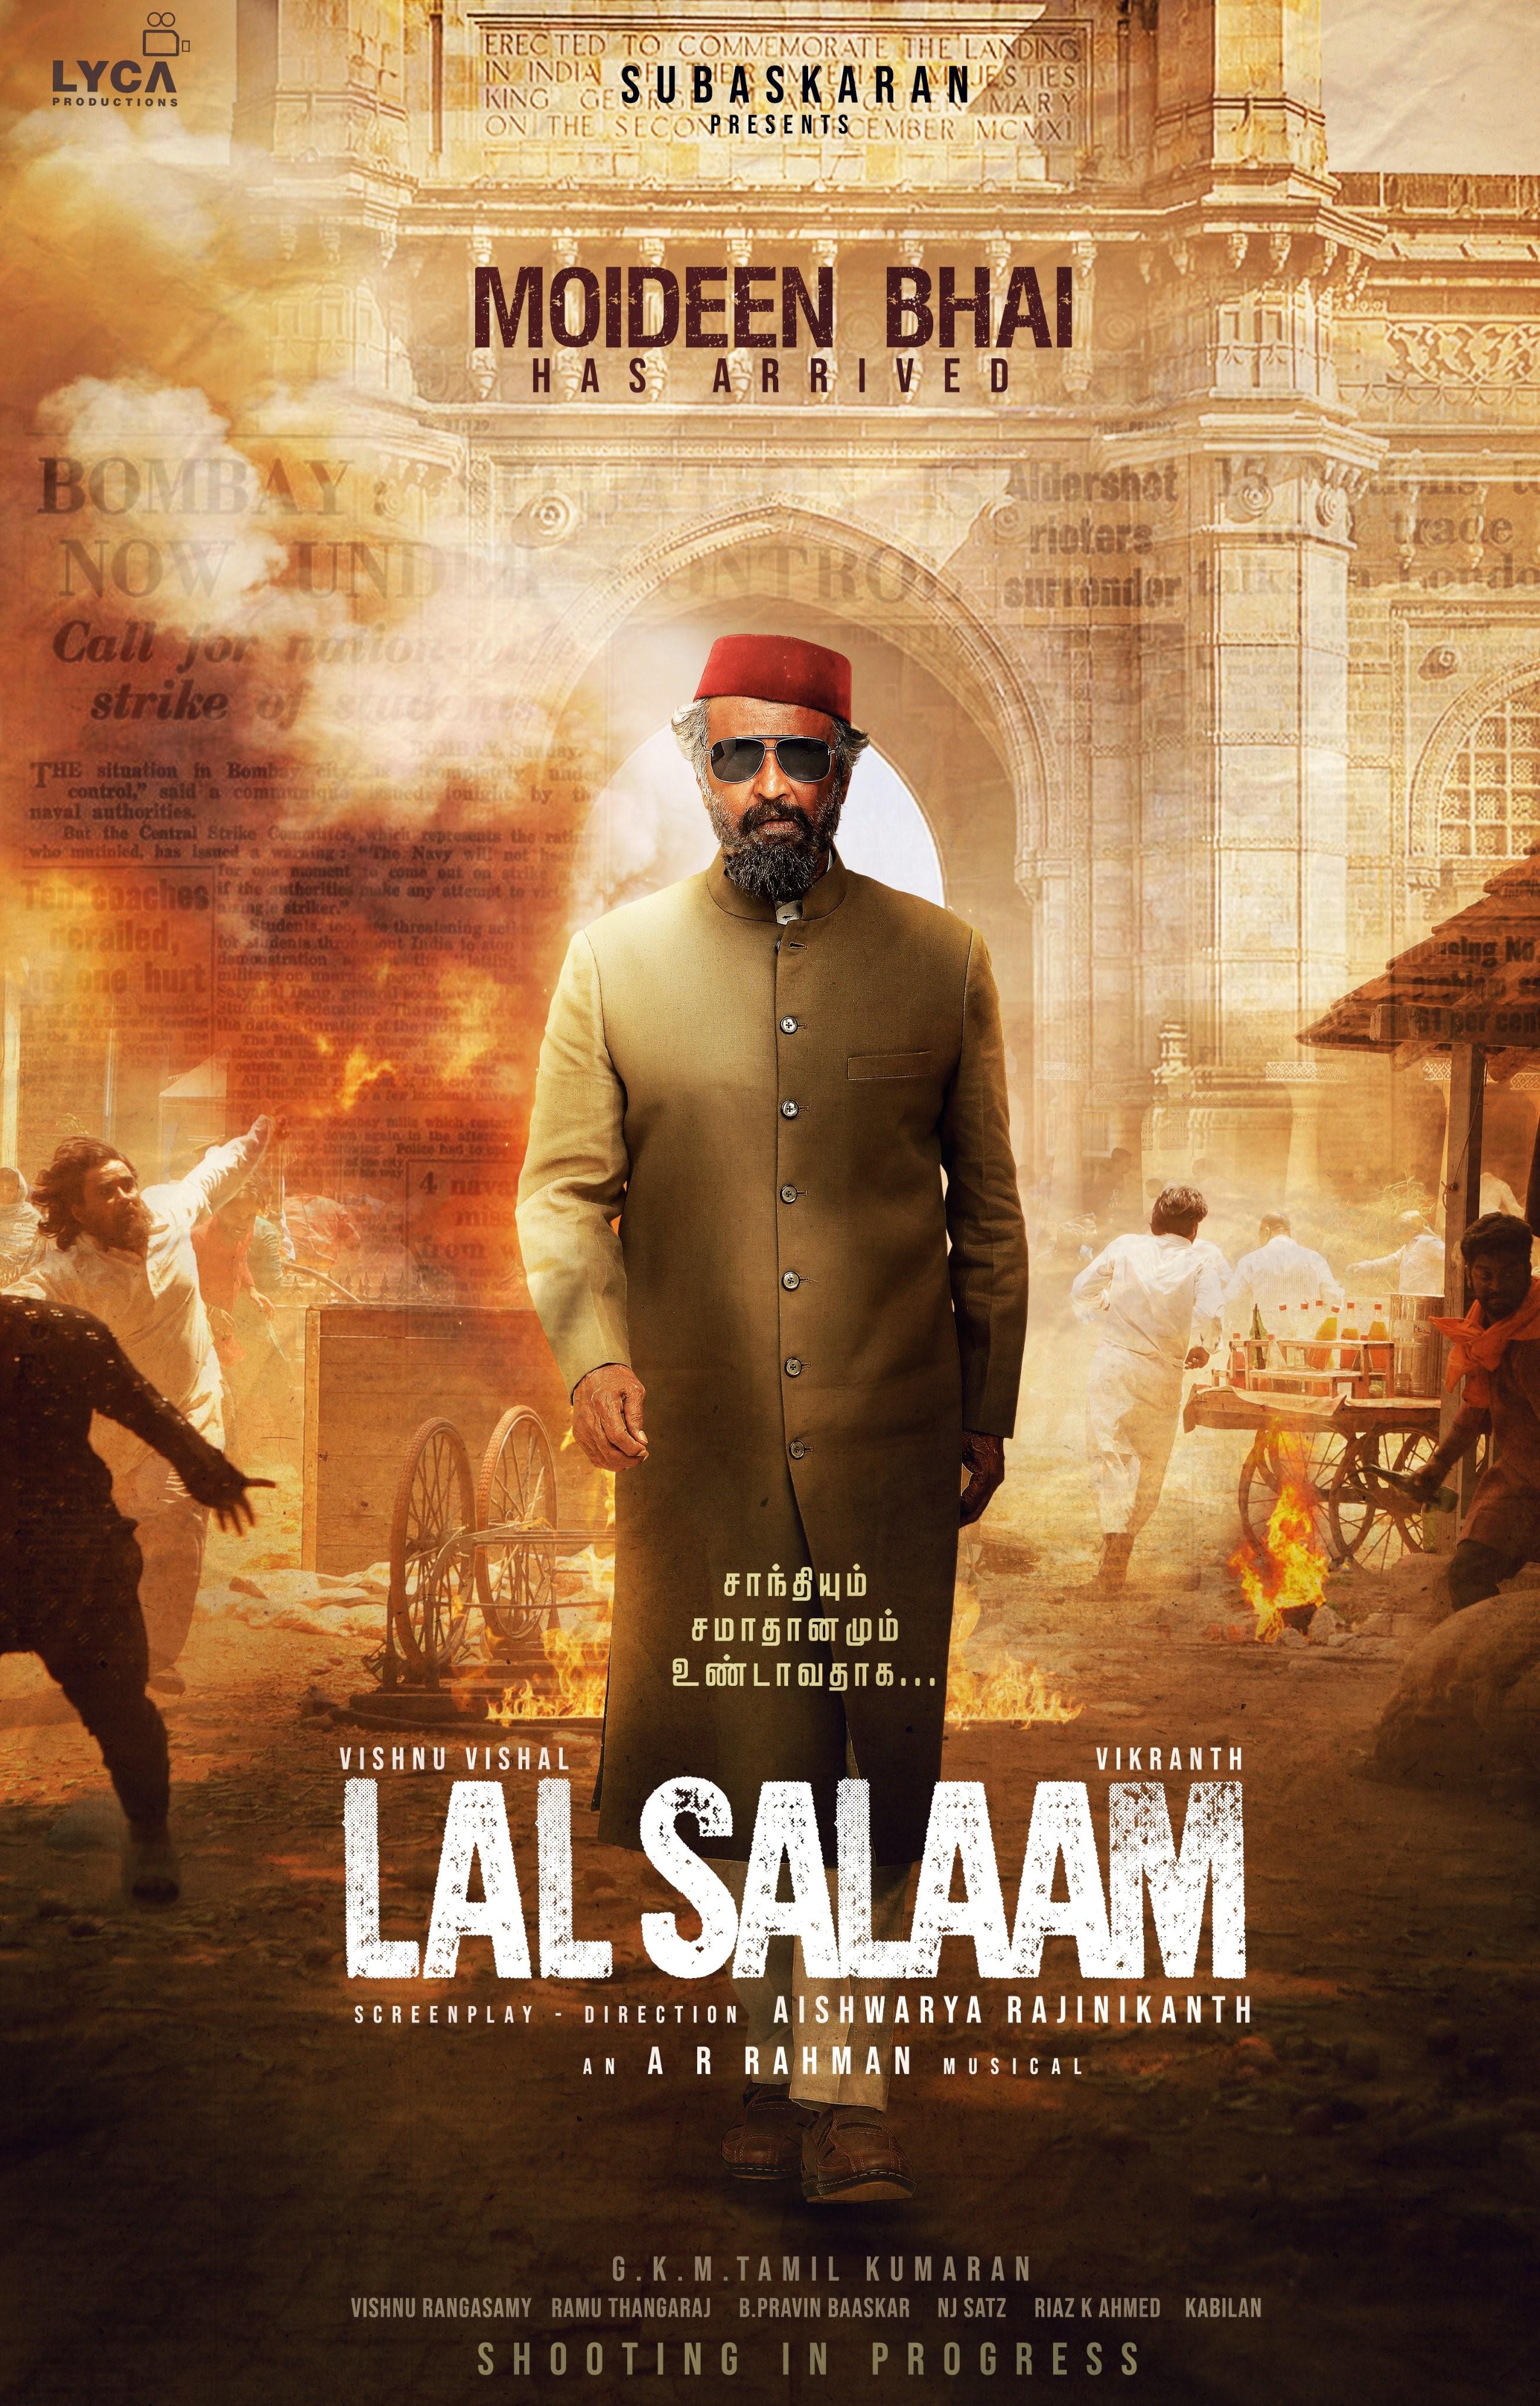 Lal Salaam Rajinikanth plays a Muslim in a communistpaint movie